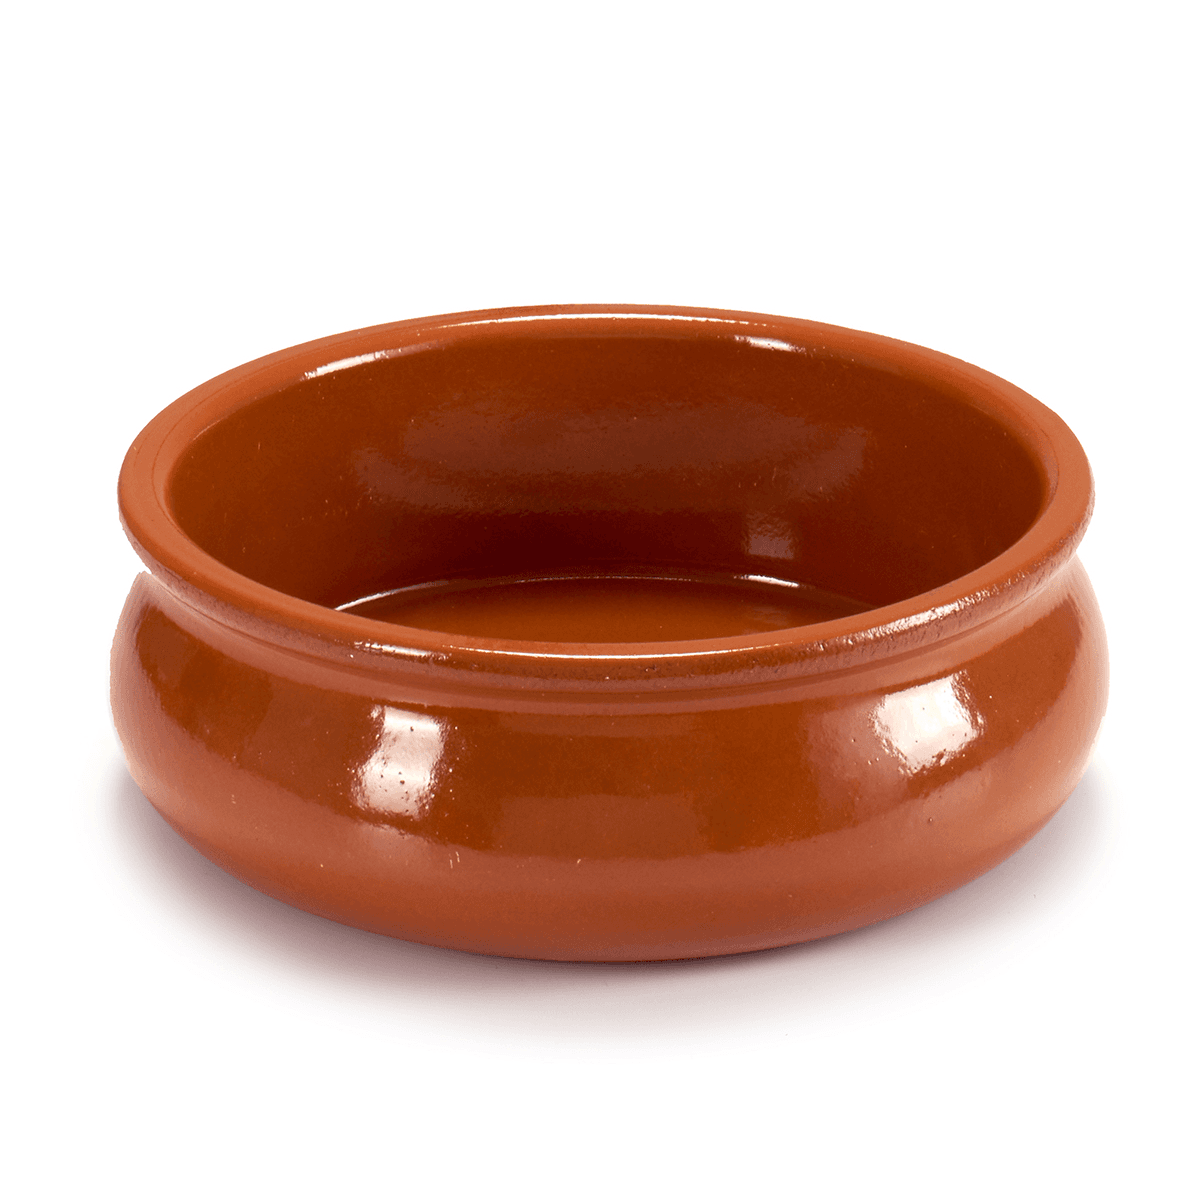 صحن شوربة فخار عميق 18 سم صناعة اسبانيا بني آرت ريجال Arte Regal Brown Clay Belly Cooking Bowl